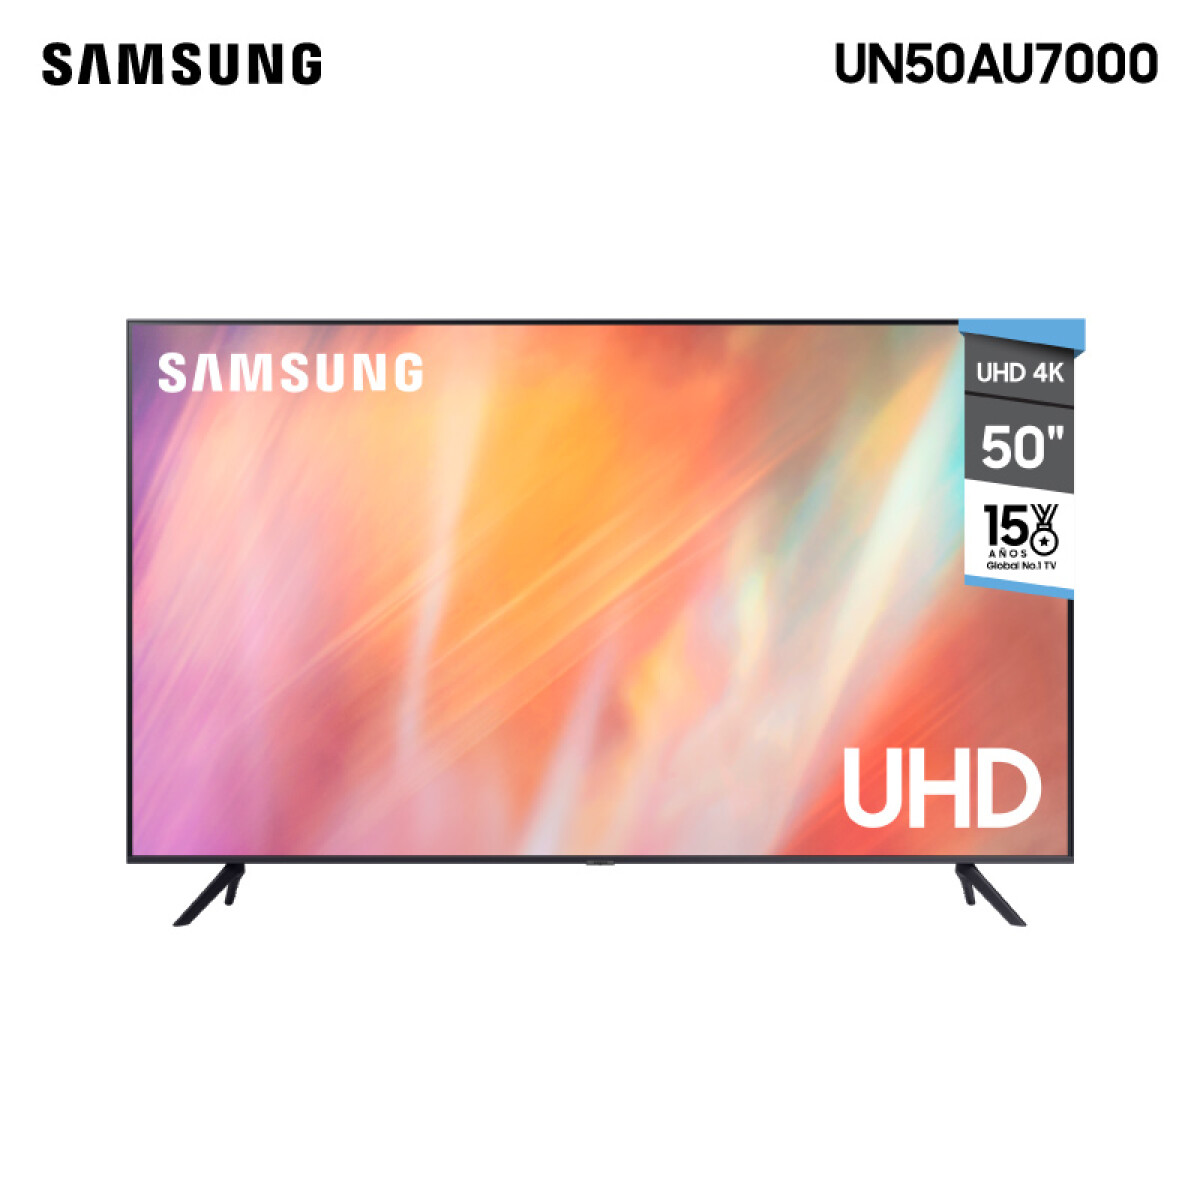 Smart Tv Samsung Series 7 Un50au7000gczb Led 4k 50 220v - 240v 